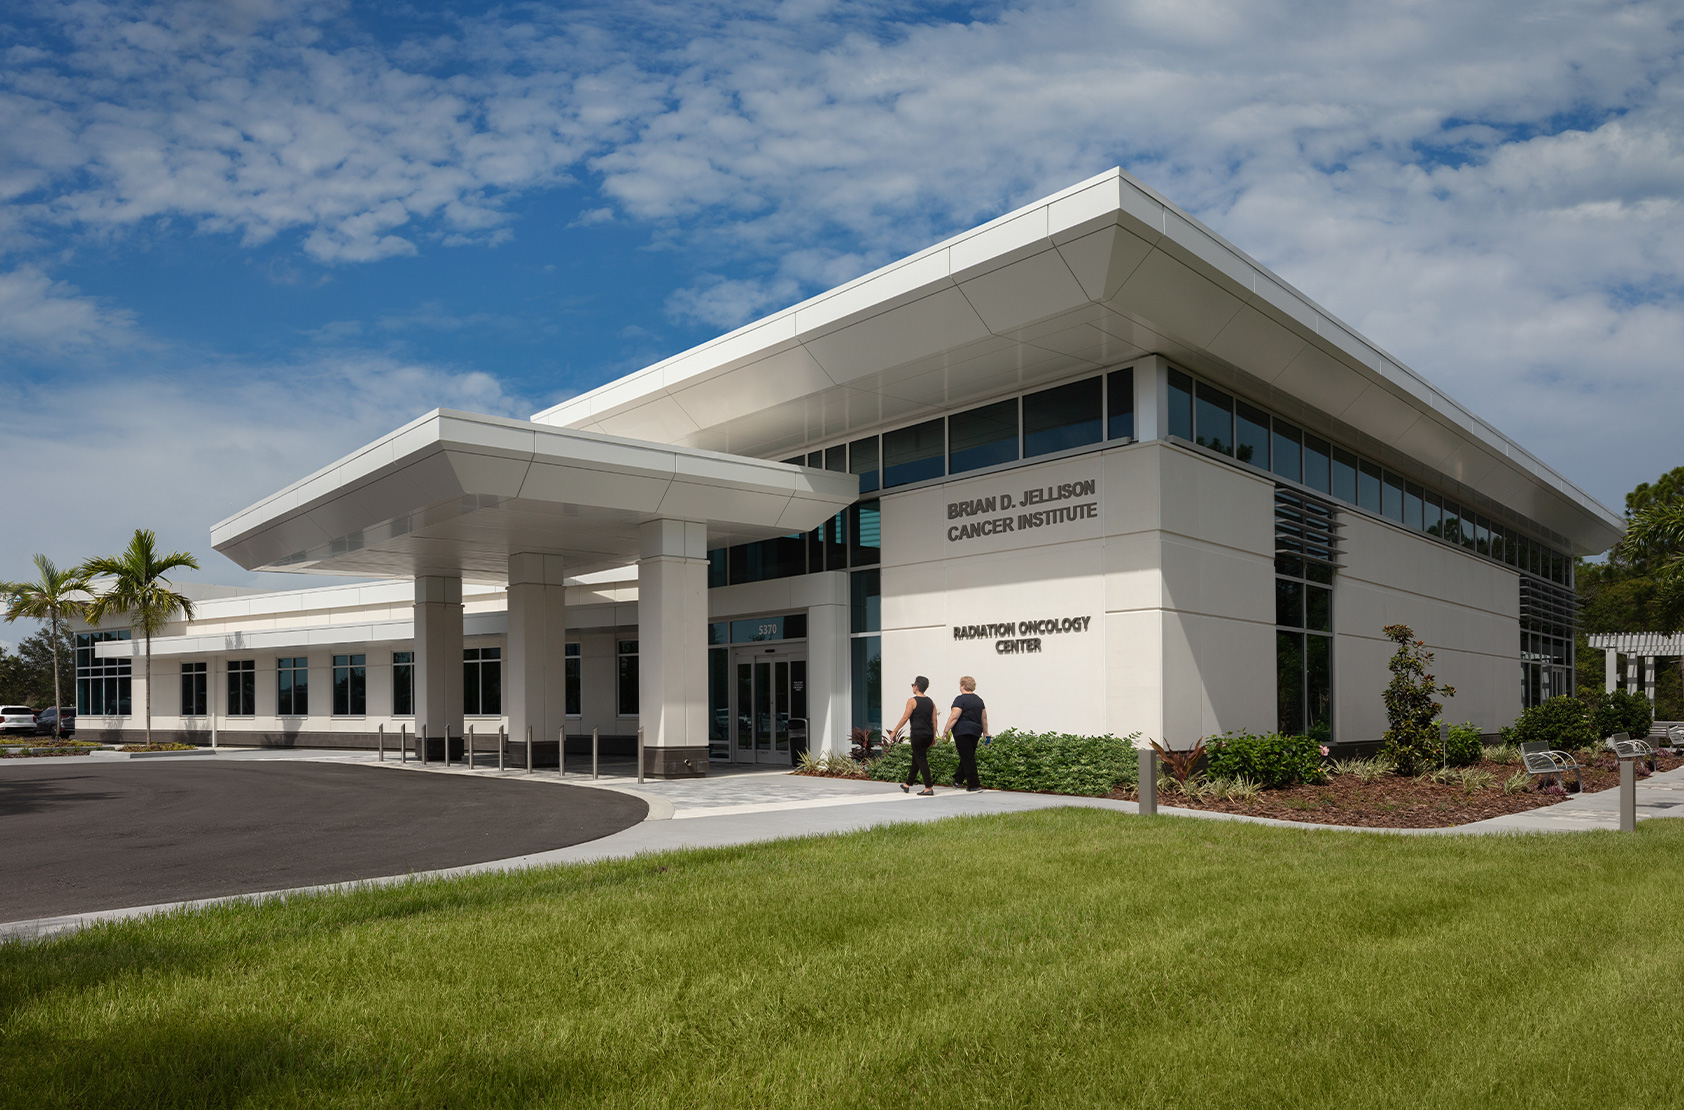 Sarasota Memorial Hospital - Radiation Oncology Center